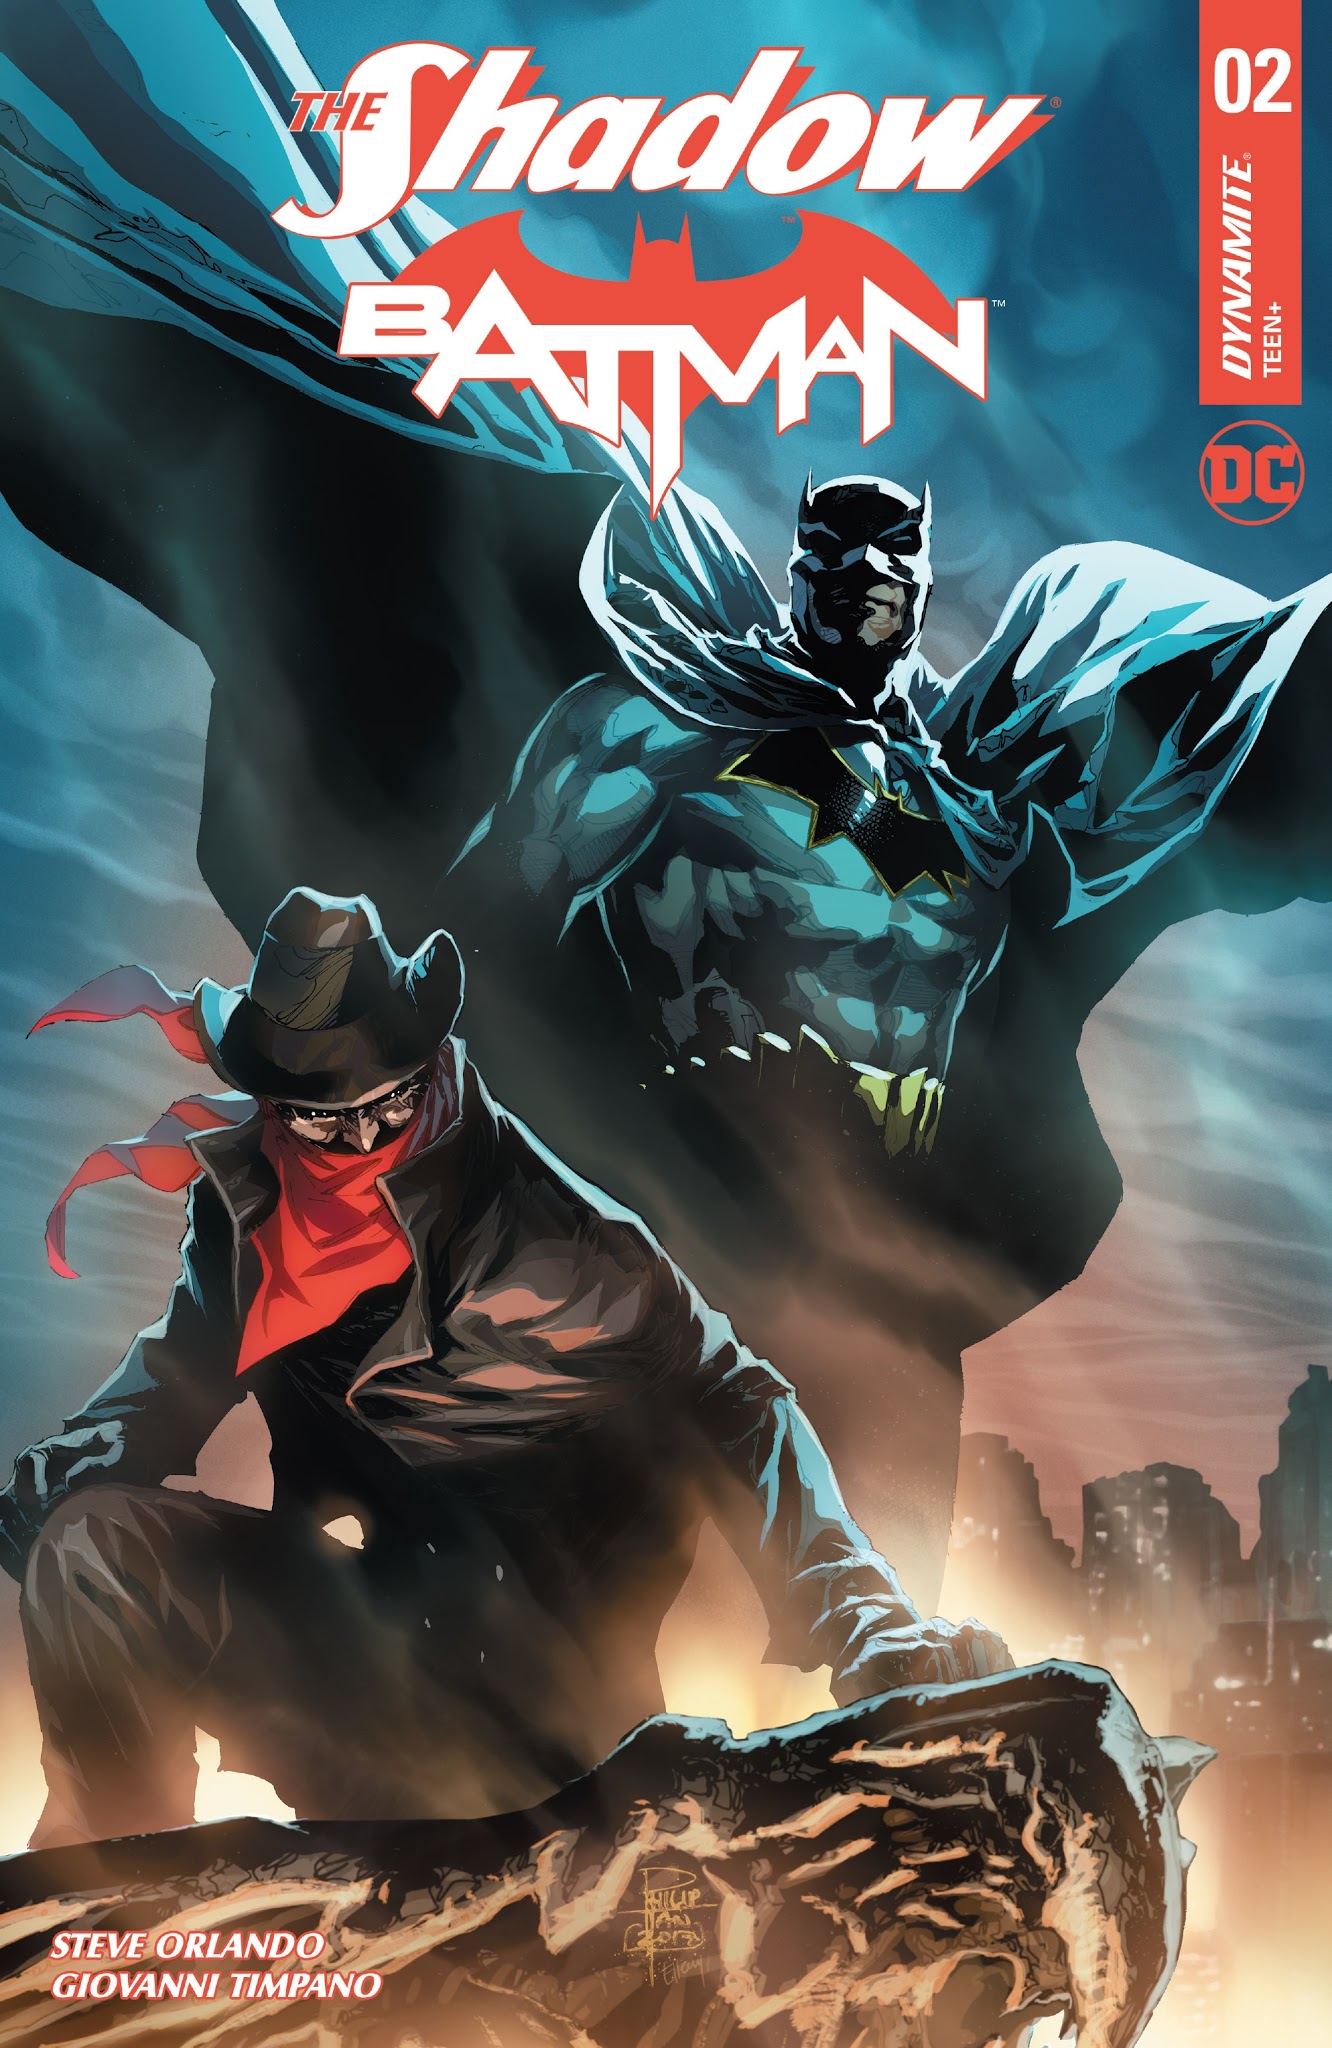 Read online The Shadow/Batman comic -  Issue #2 - 4